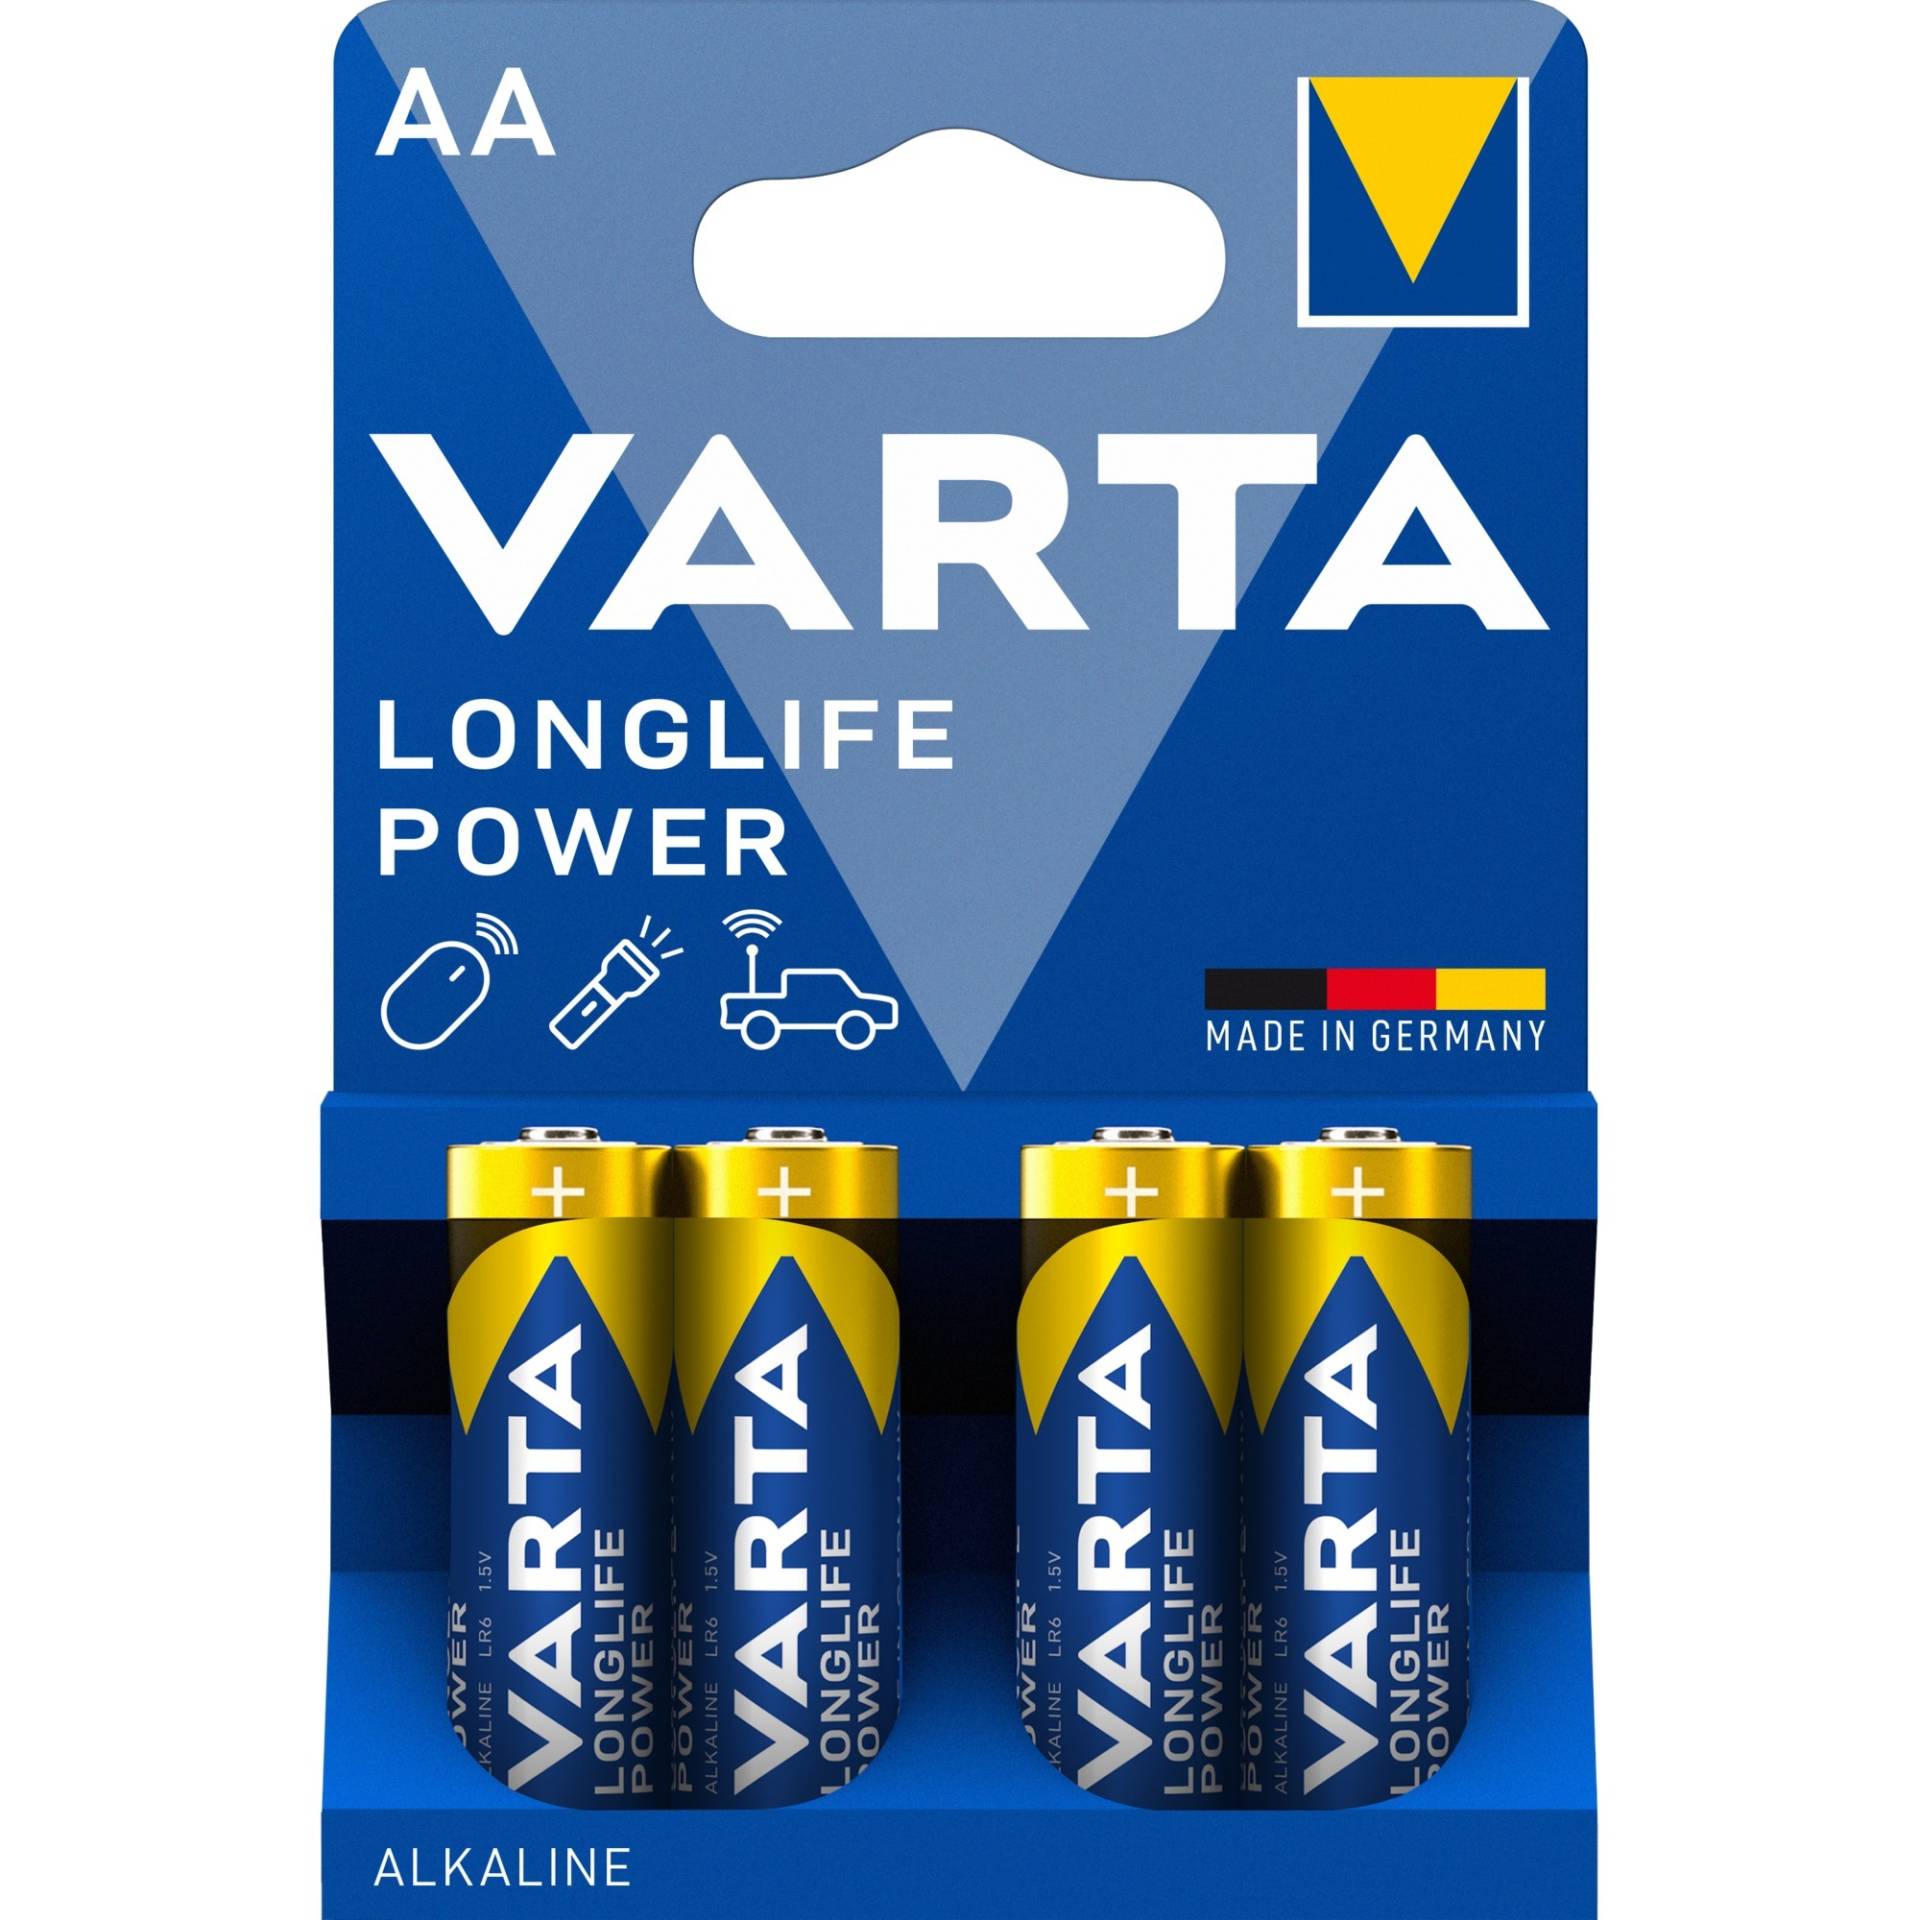 Longlife Power, Batterie von Varta